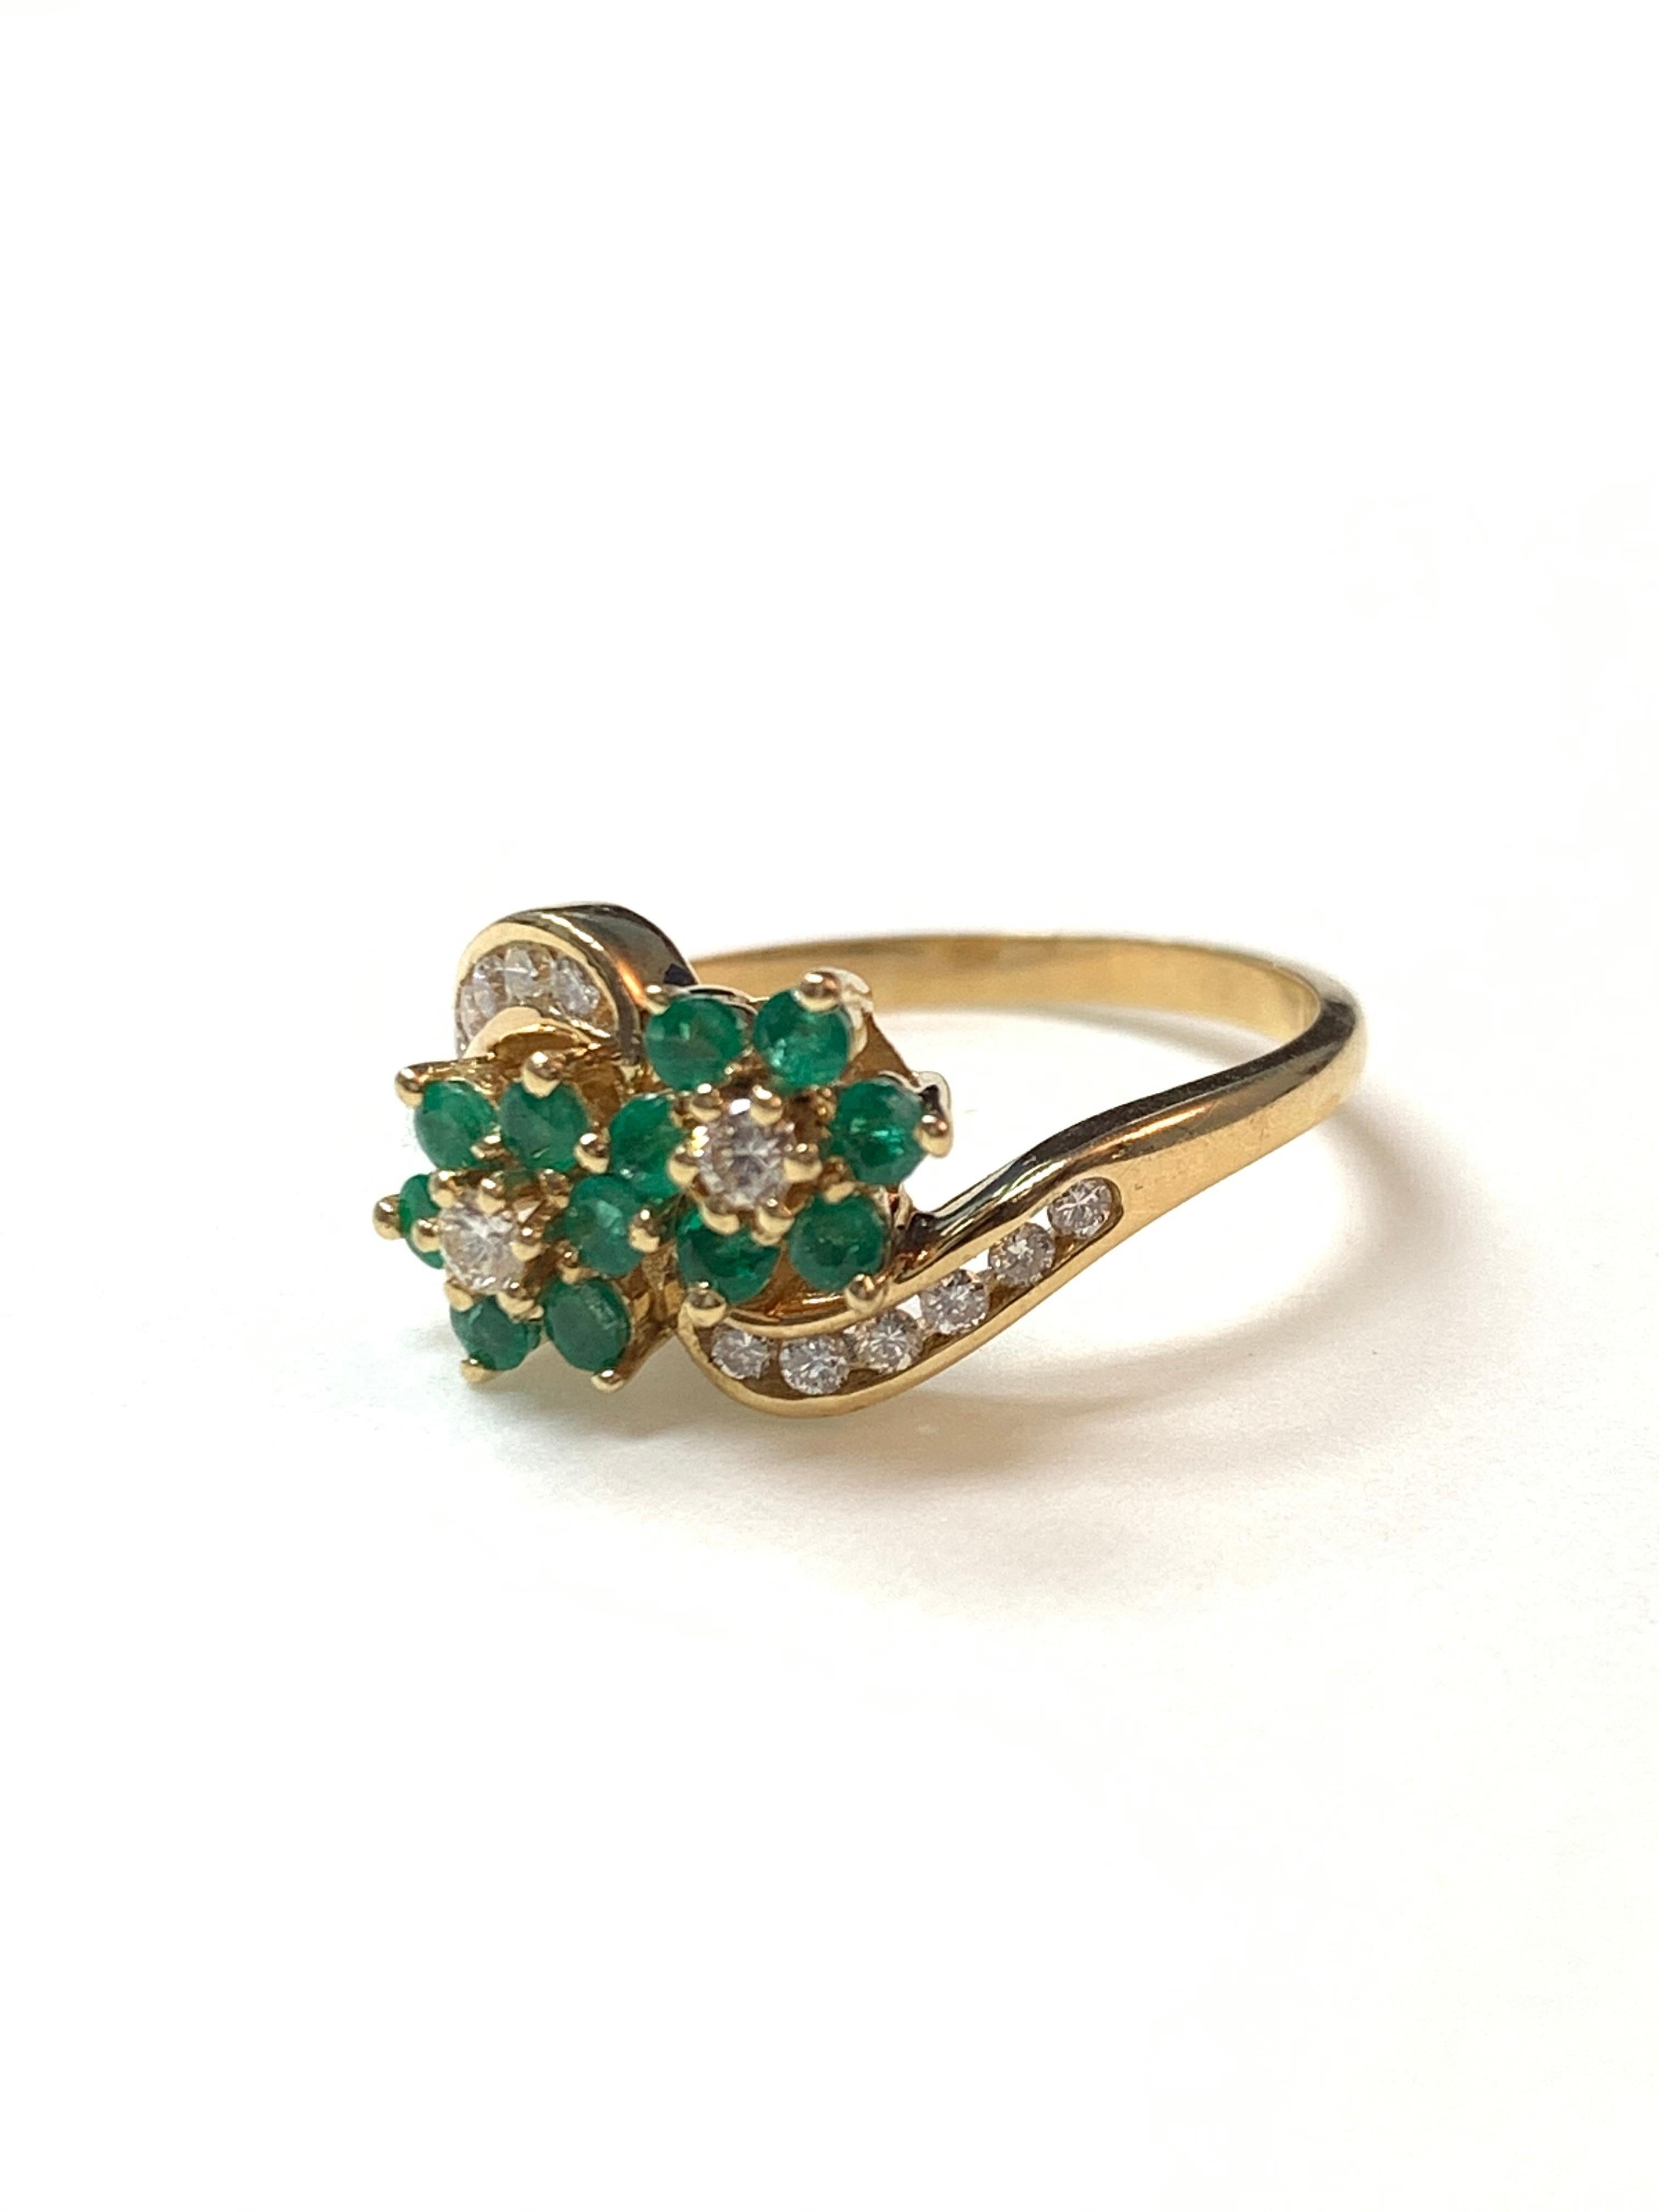 Women's Diamond and Emerald Ring in 14 Karat Yellow Gold.